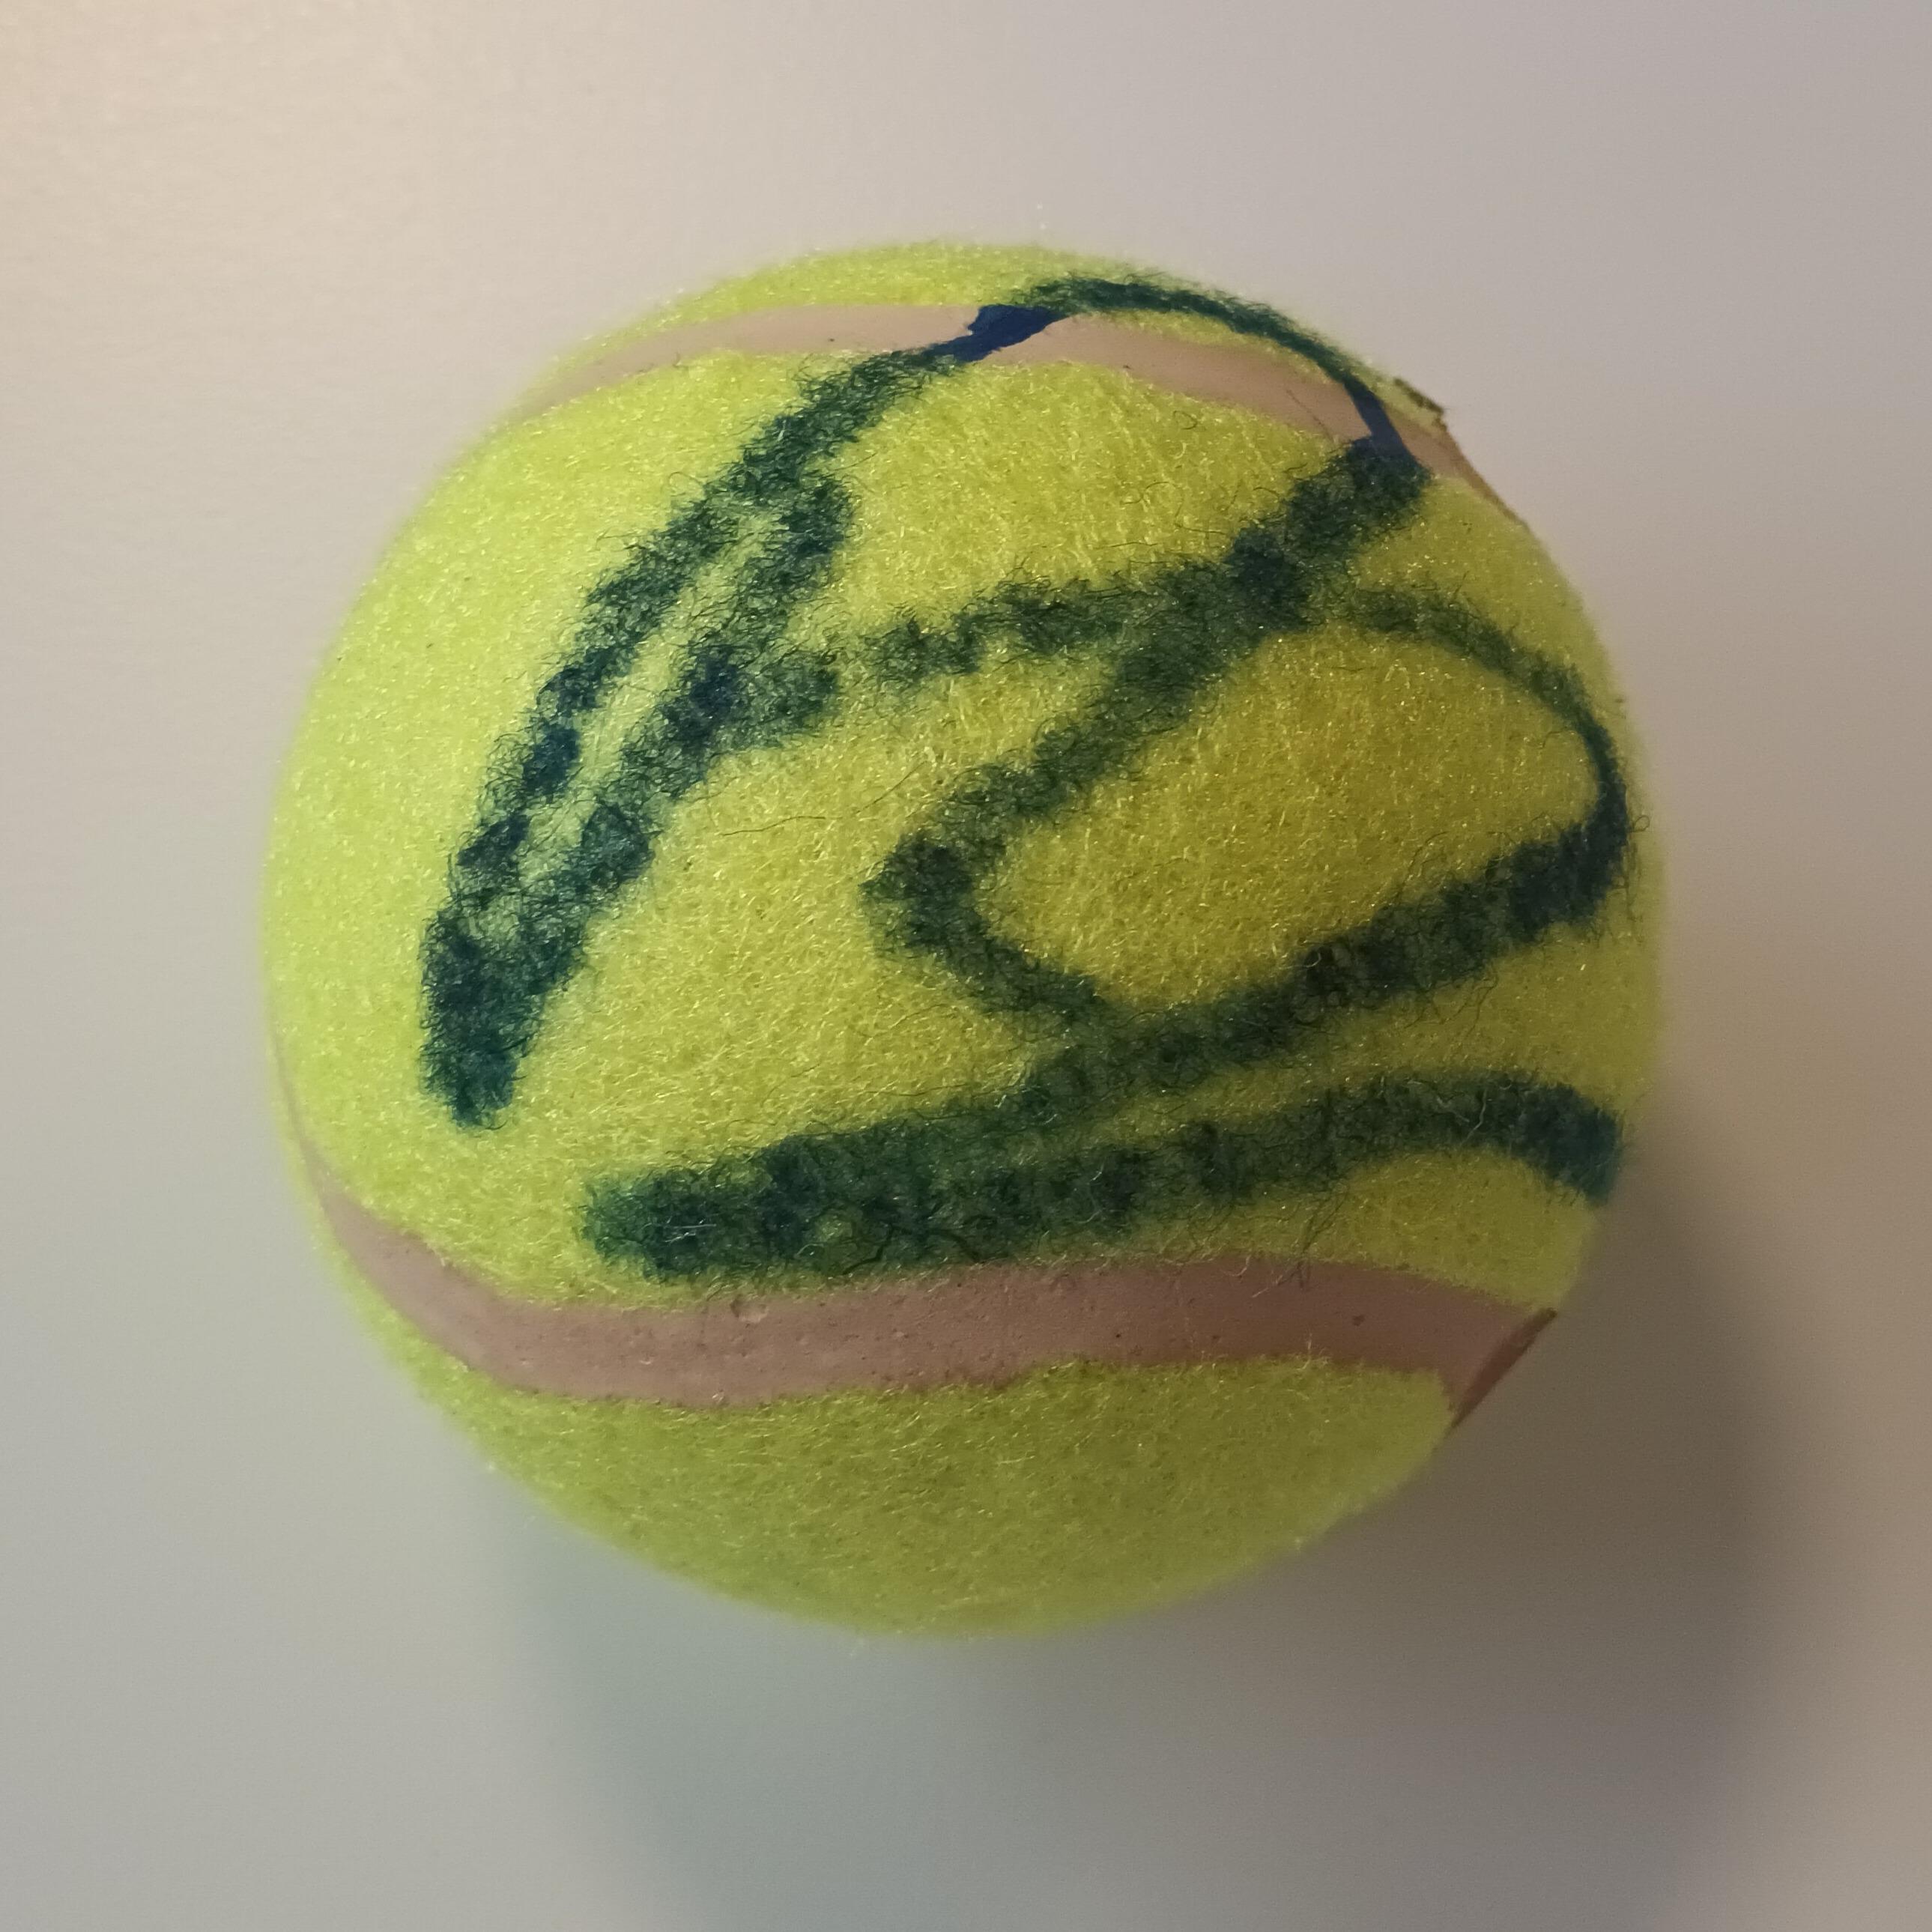 Felt Federer, Nadal and Djokovic Autographed Tennis Balls